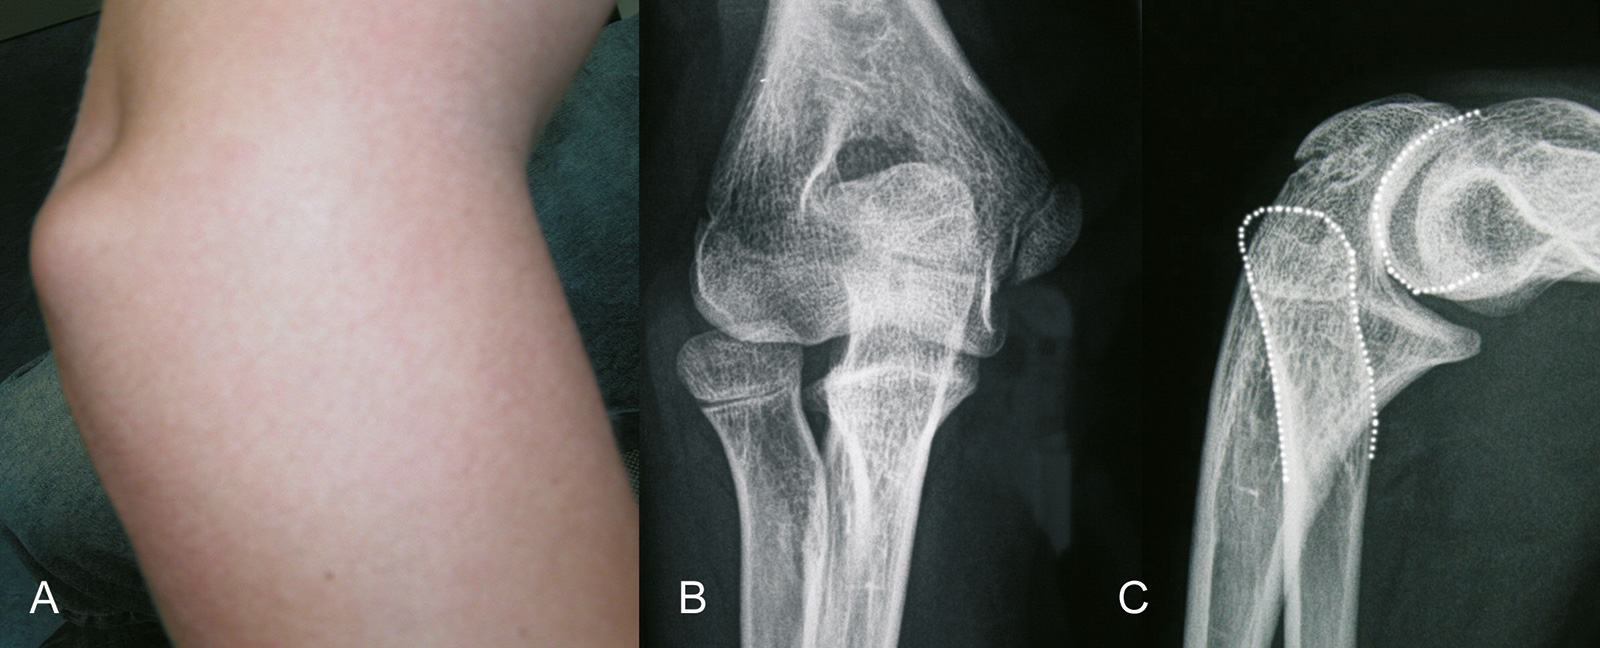 Abb. 3-82: Chronische Radiusköpfchenluxation bei einem 7-jährigen Jungen: klinisches Bild (A), natives Röntgenbild (B,C)